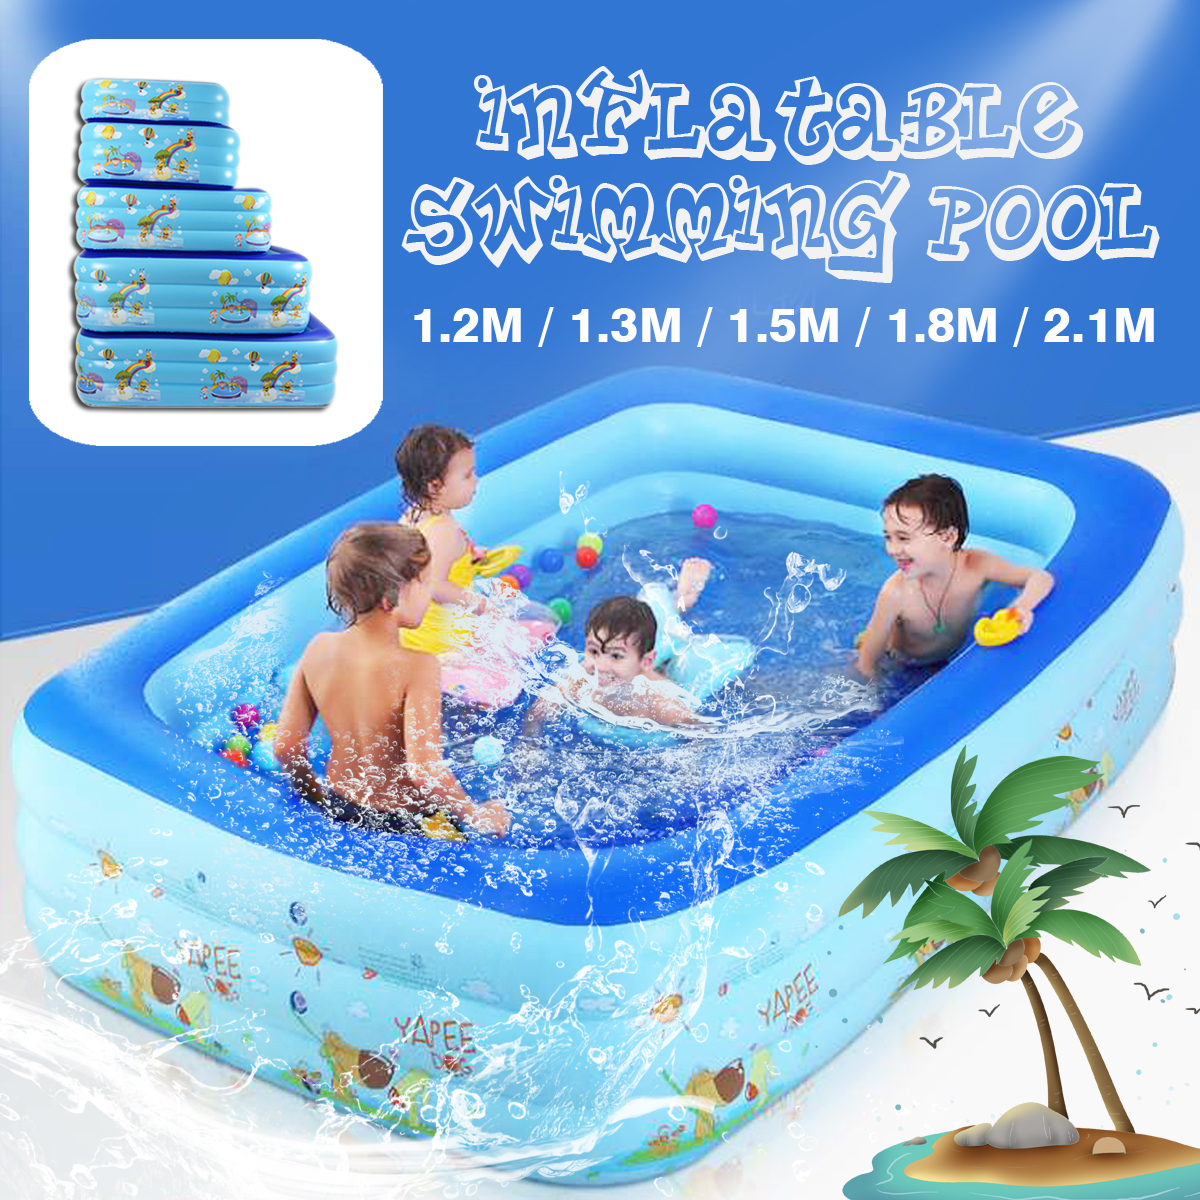 120130150180210cm-Kids-Inflatable-Swimming-Pool-Indoor-Home-For-Children-Swim-1674805-2